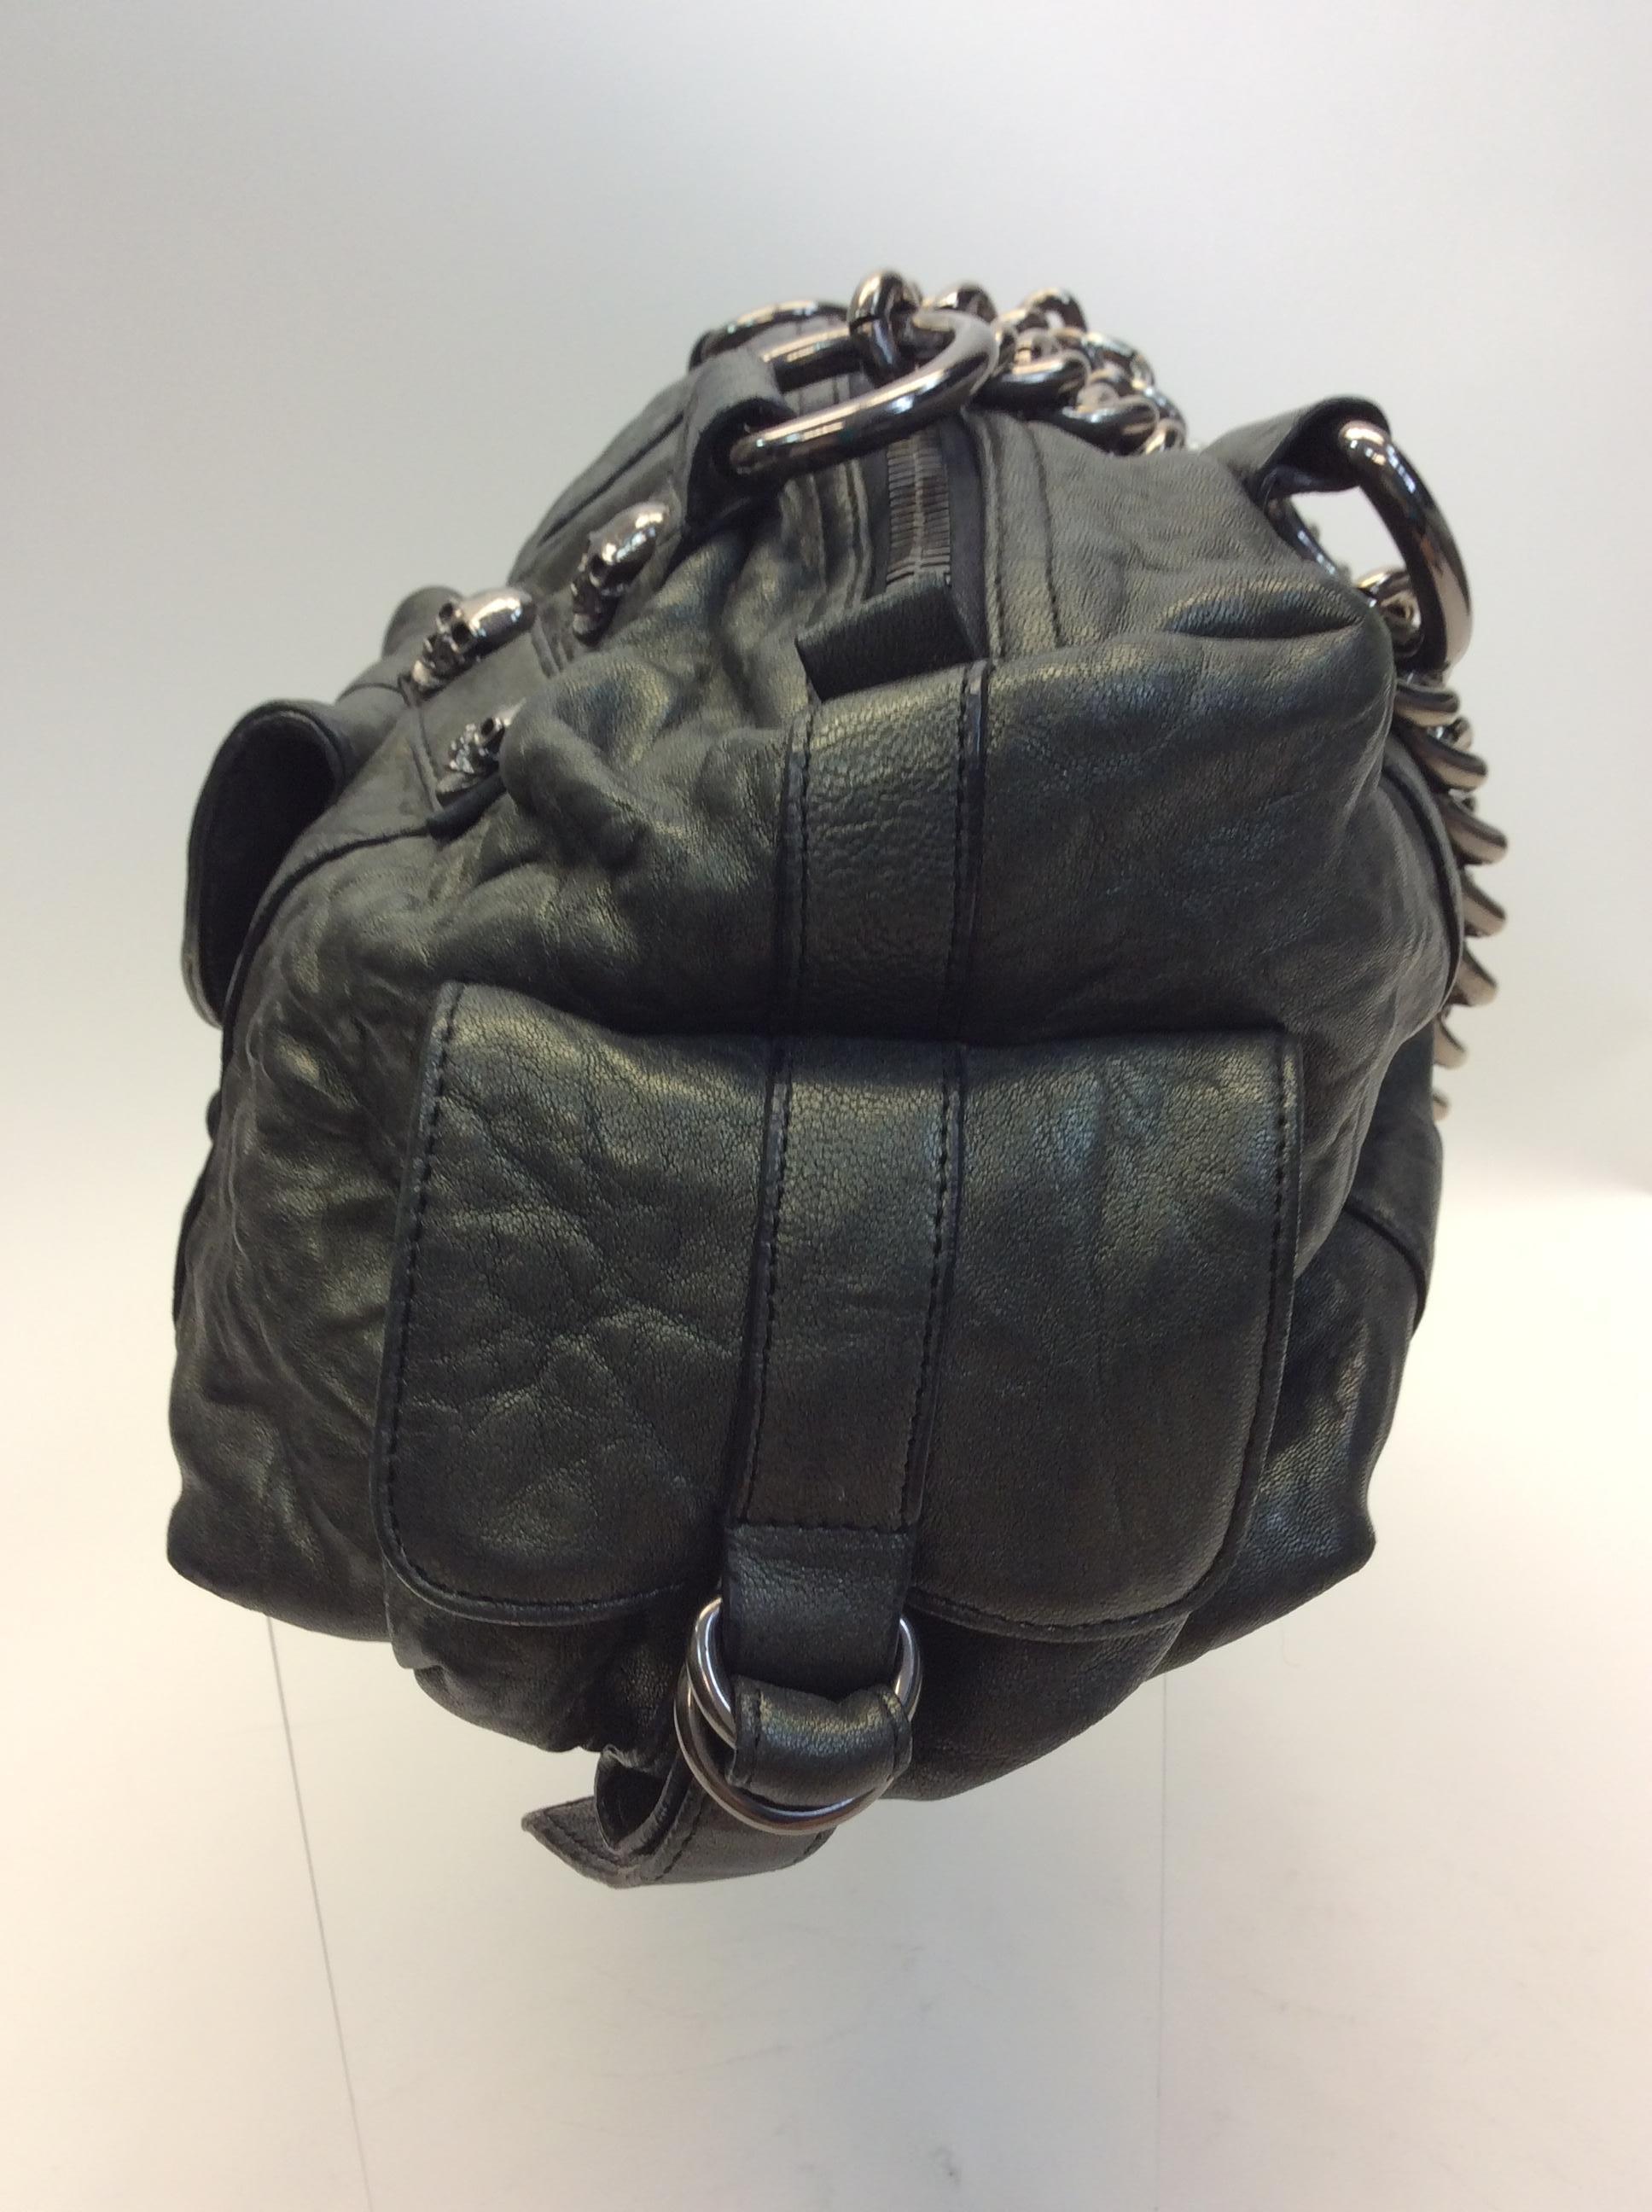 Thomas Wylde Green Leather Skull Handbag
$699
Leather
15